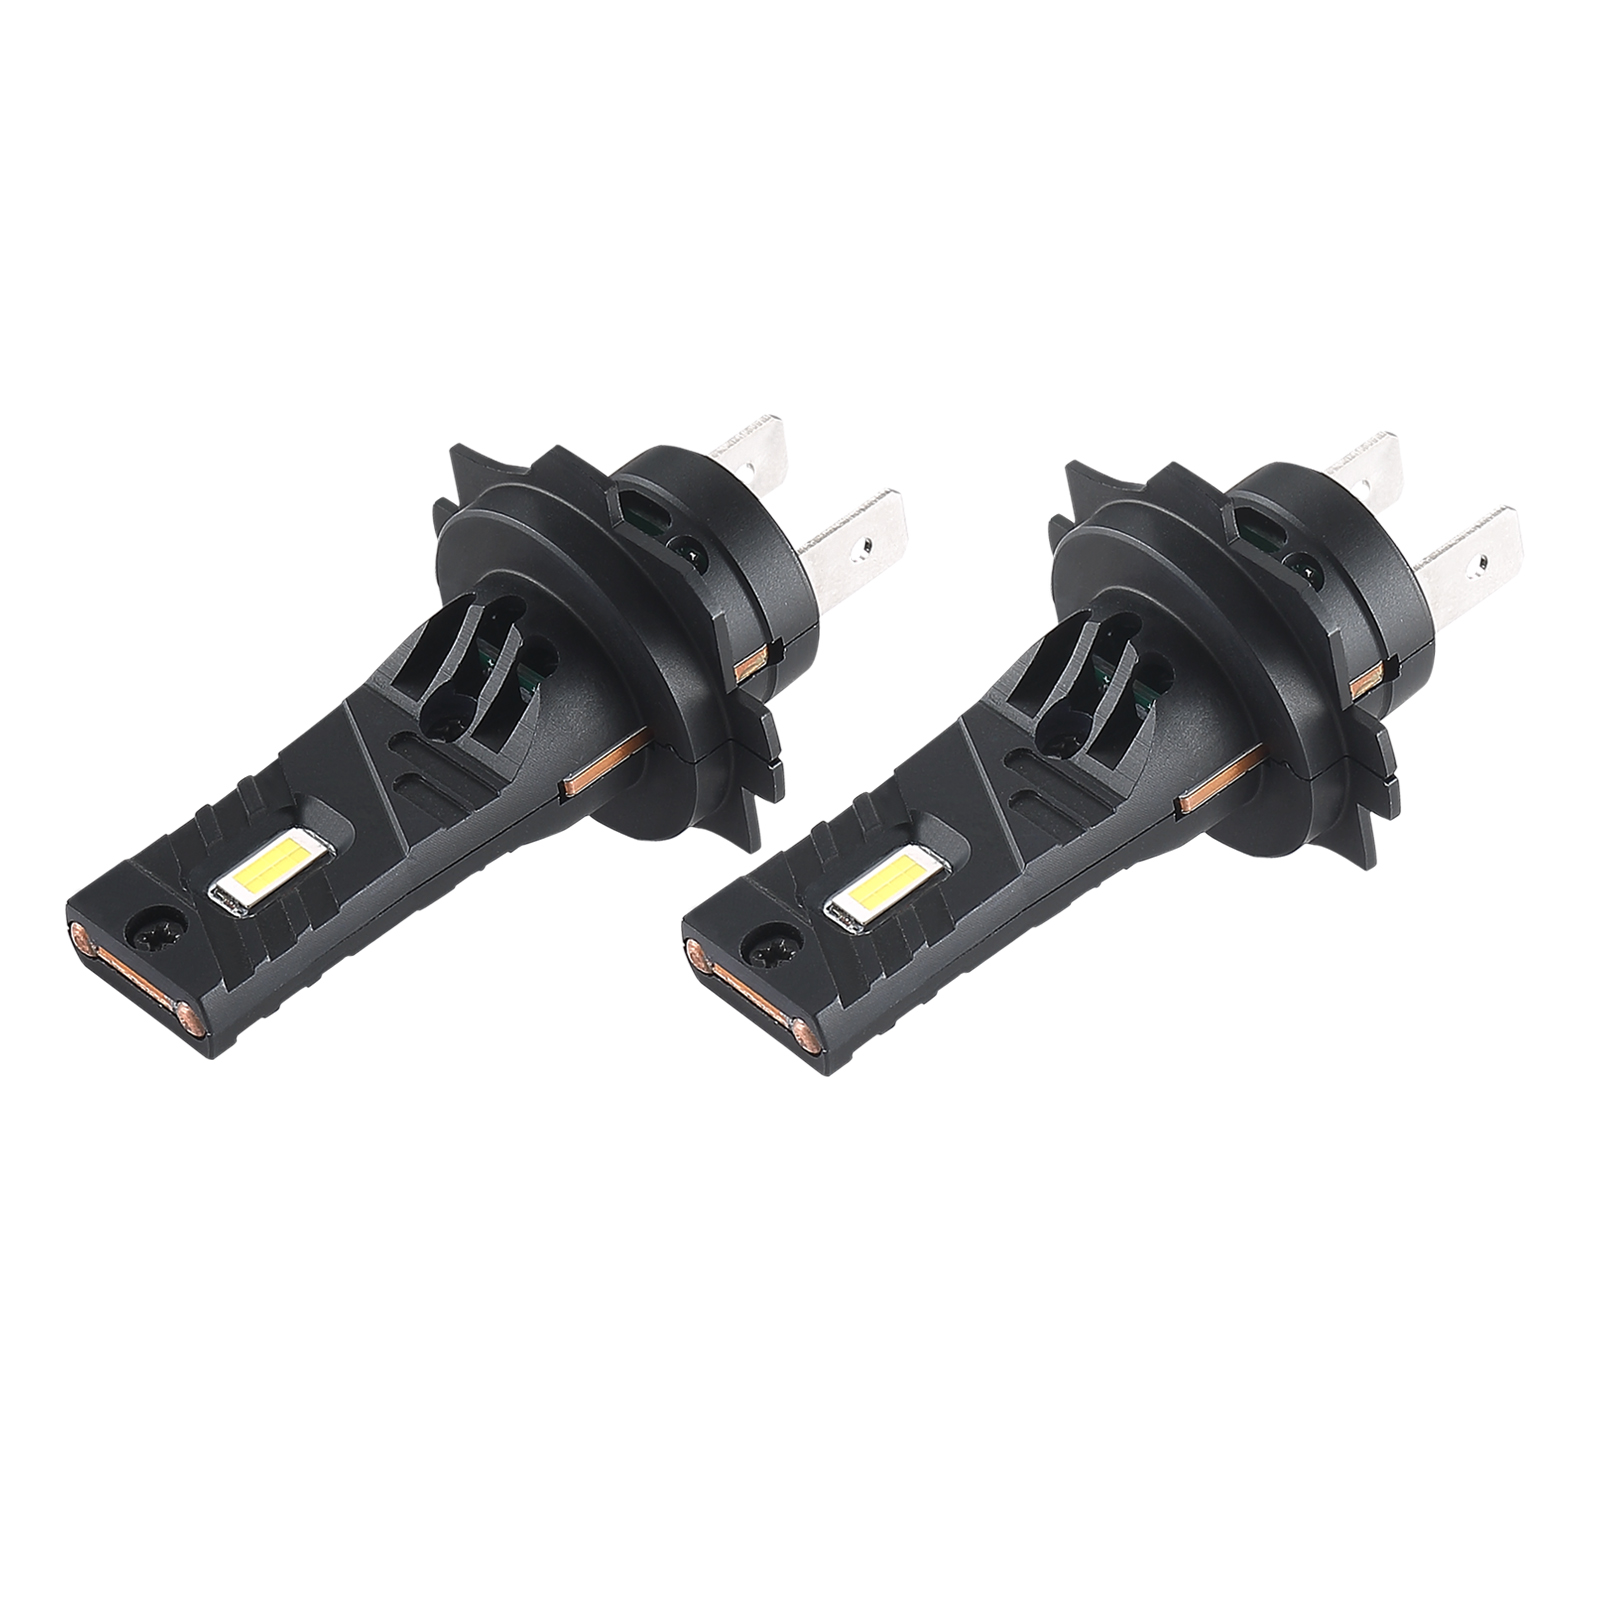 Auto Lighting H7 LED Headlight Bulb 1:1 Mini Size Plug and Play for Hi/Lo Beam Car Headlamp H1 H3 9005 9006 H11 H4 H1R2 Replacement Bulb - COPY - pb1a44